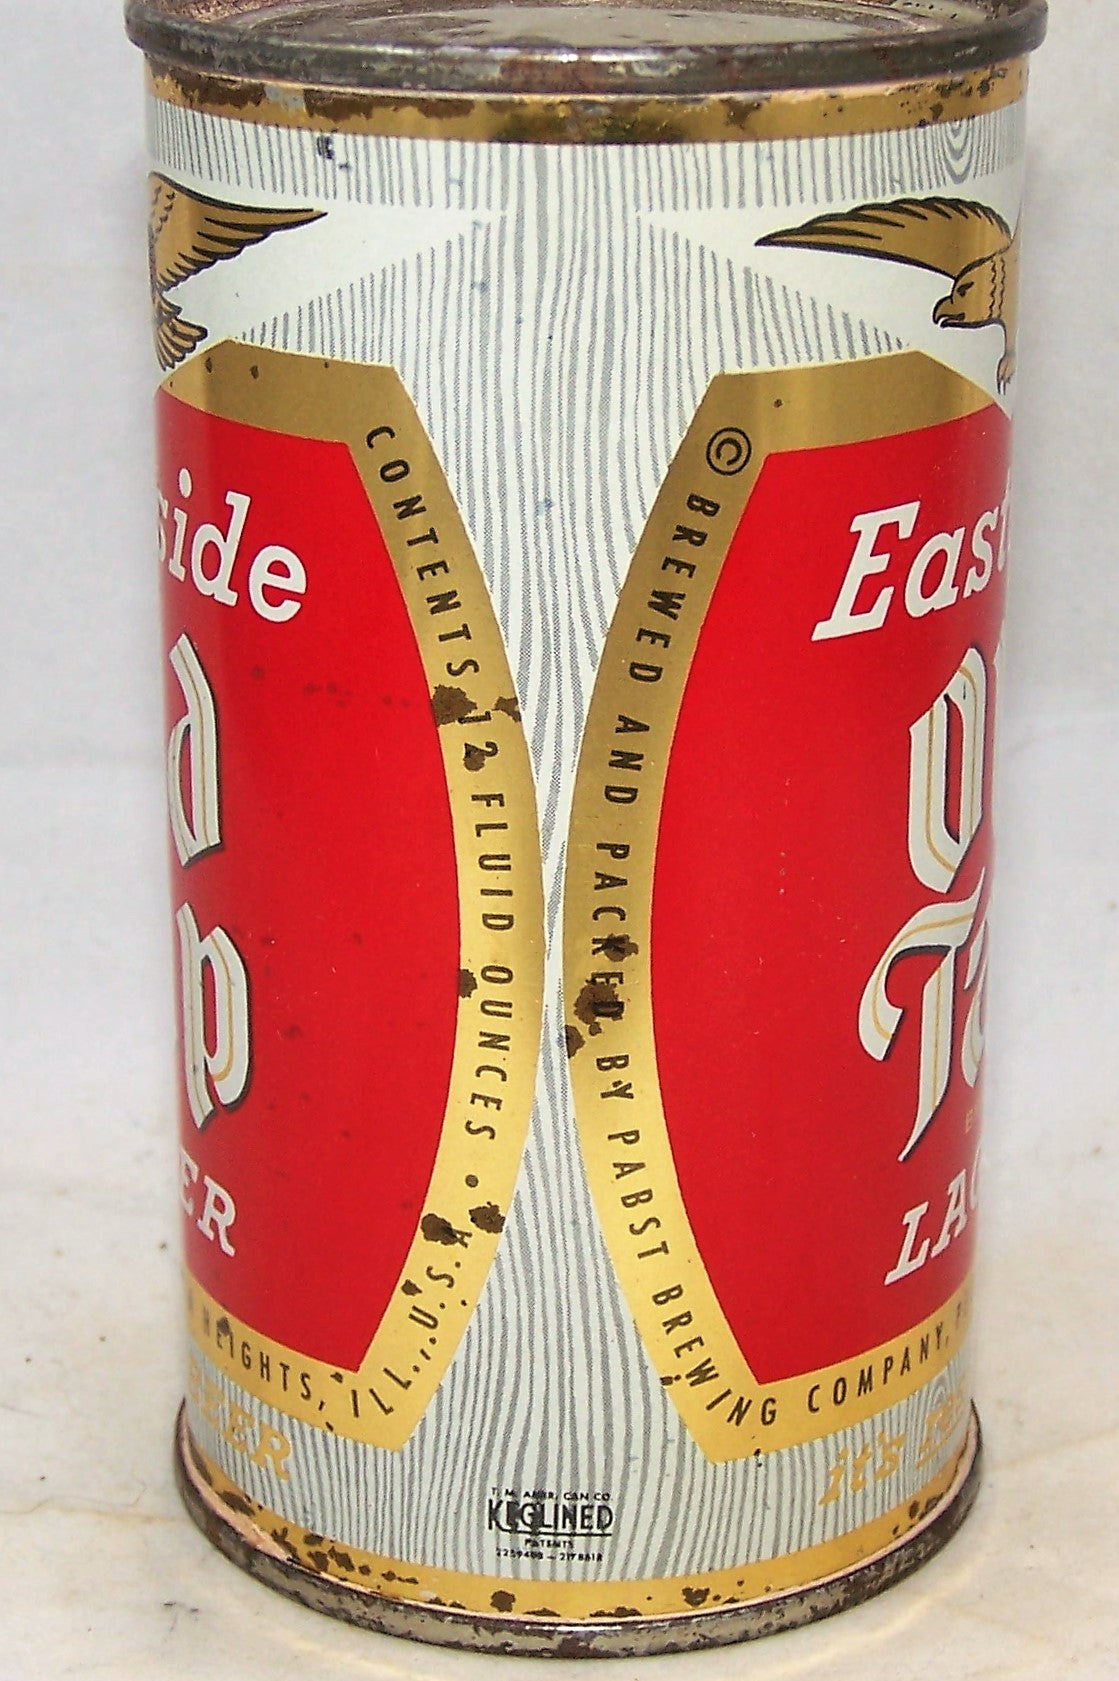 Eastside Old Tap Lager Beer, Peoria Hts. USBC 58-26, Grade 1/1-